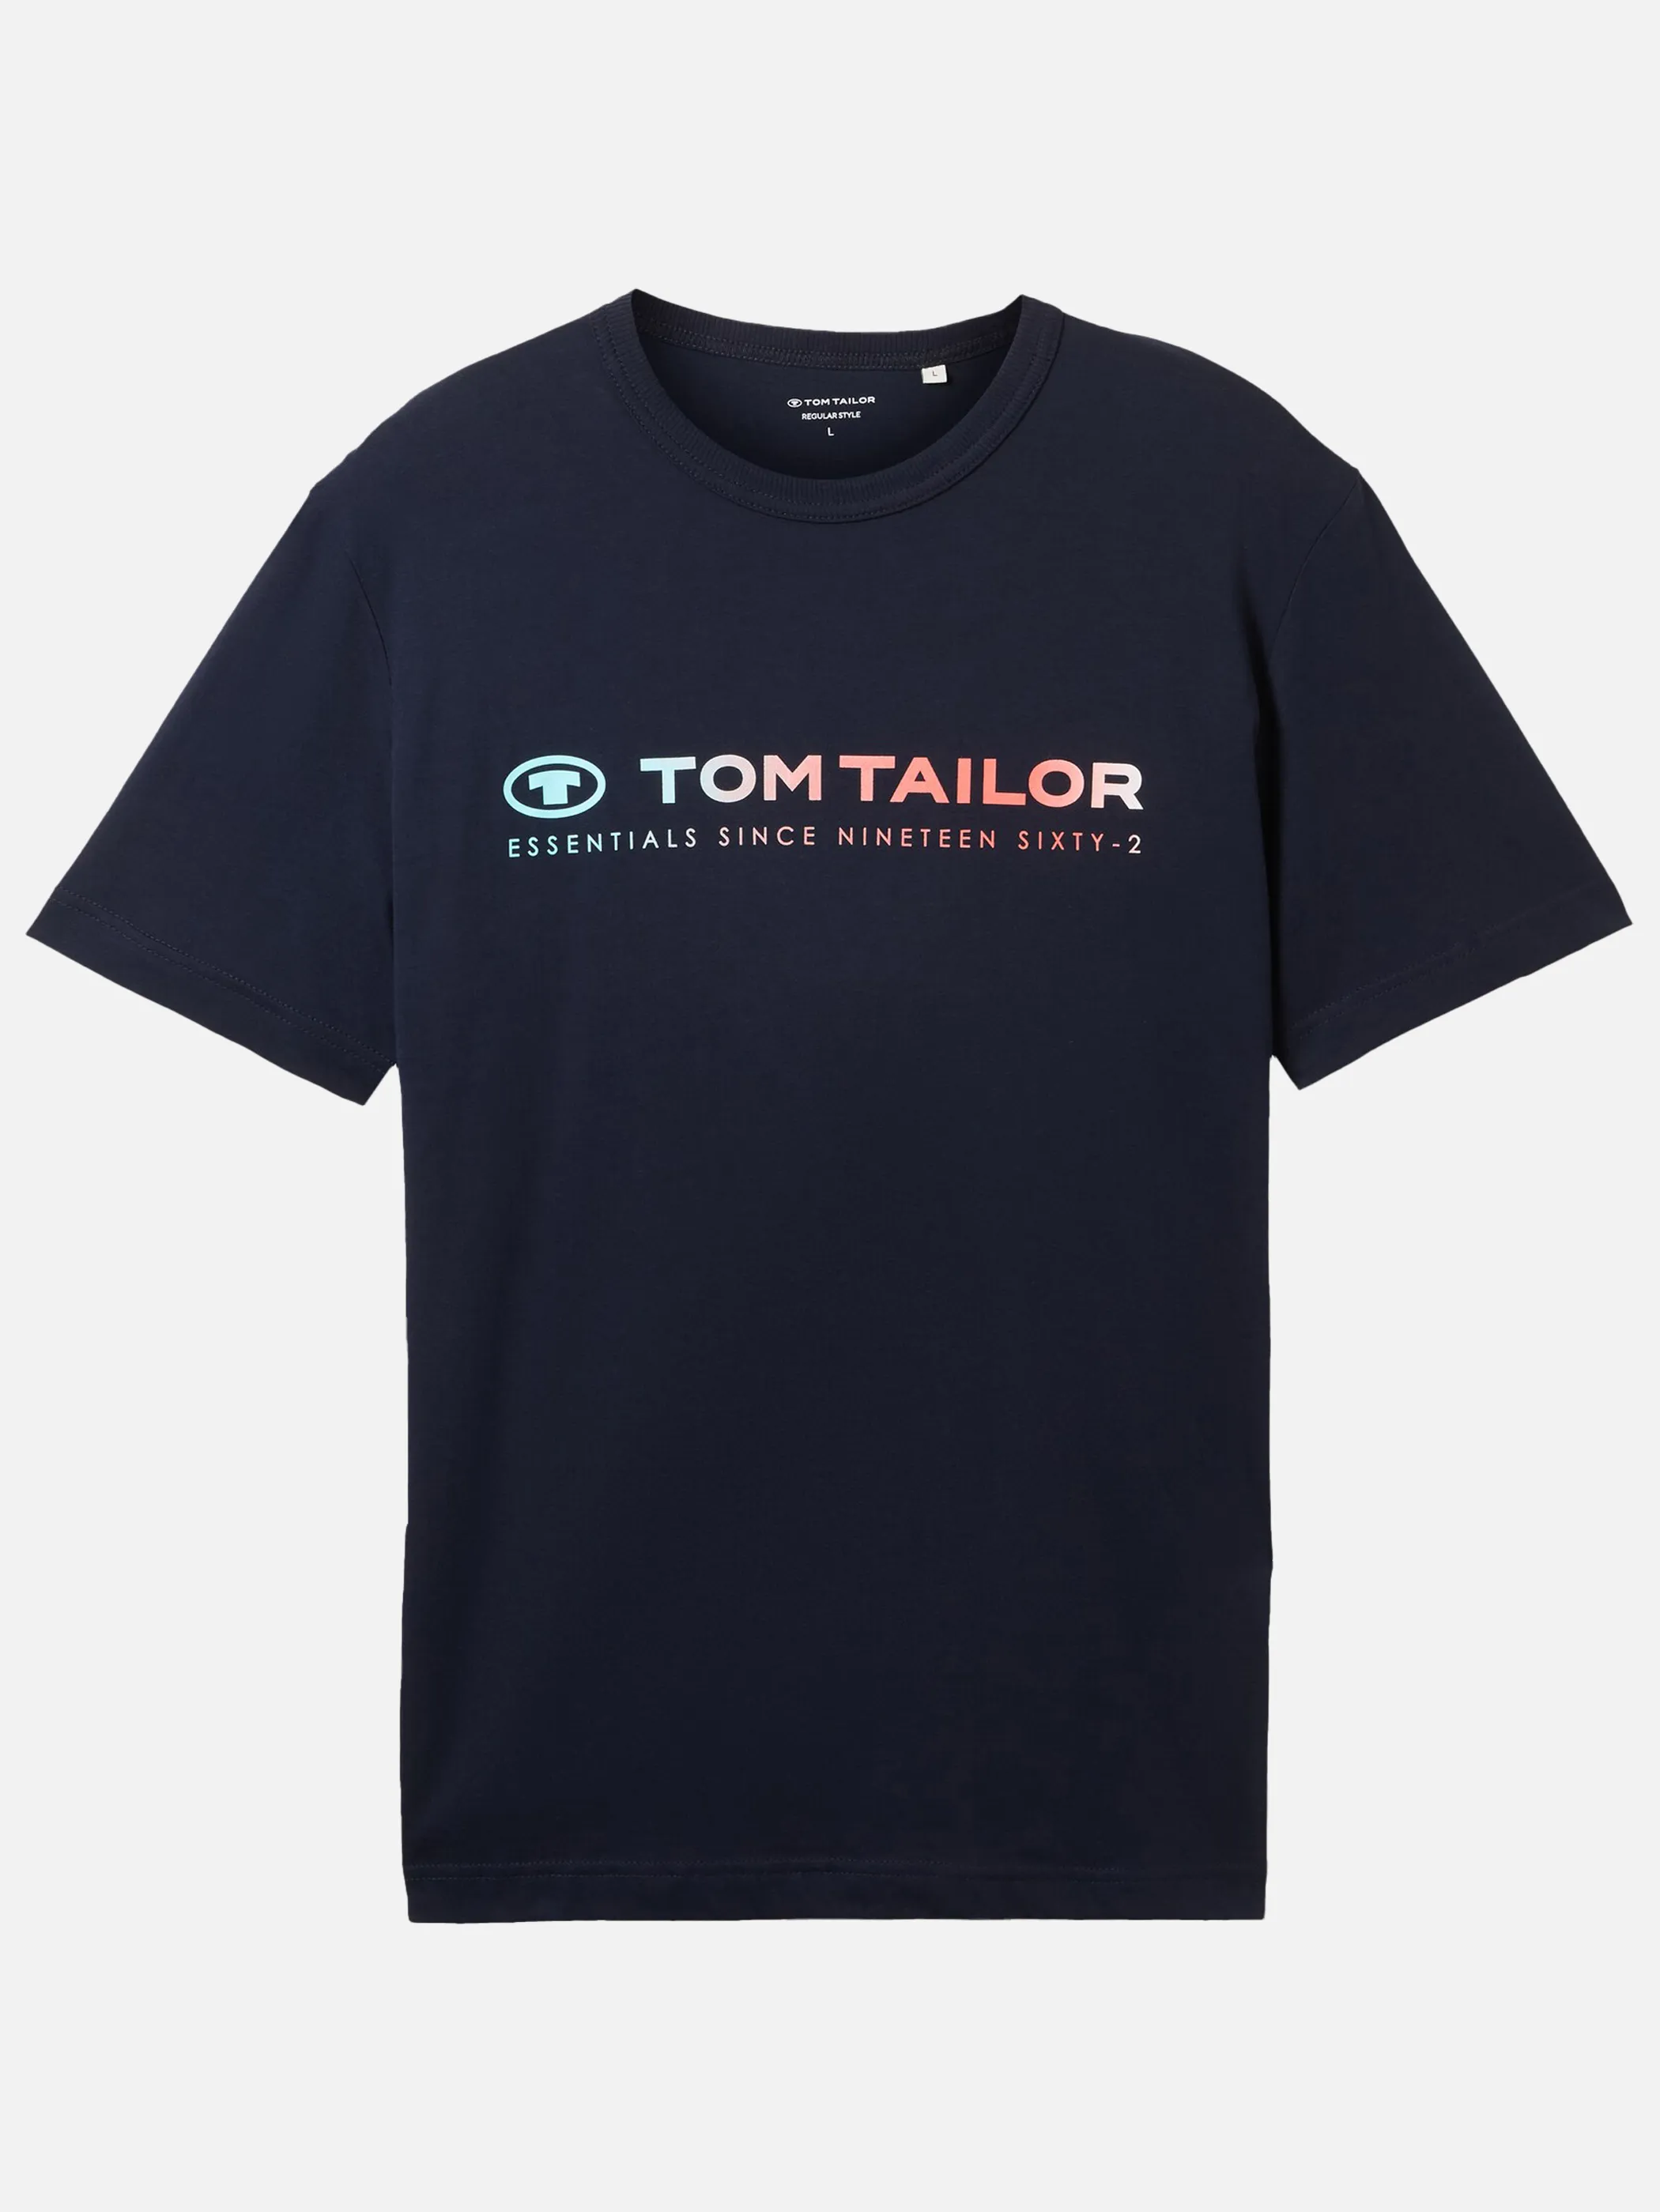 Tom Tailor 1041855 printed t-shirt Blau 895629 10668 1